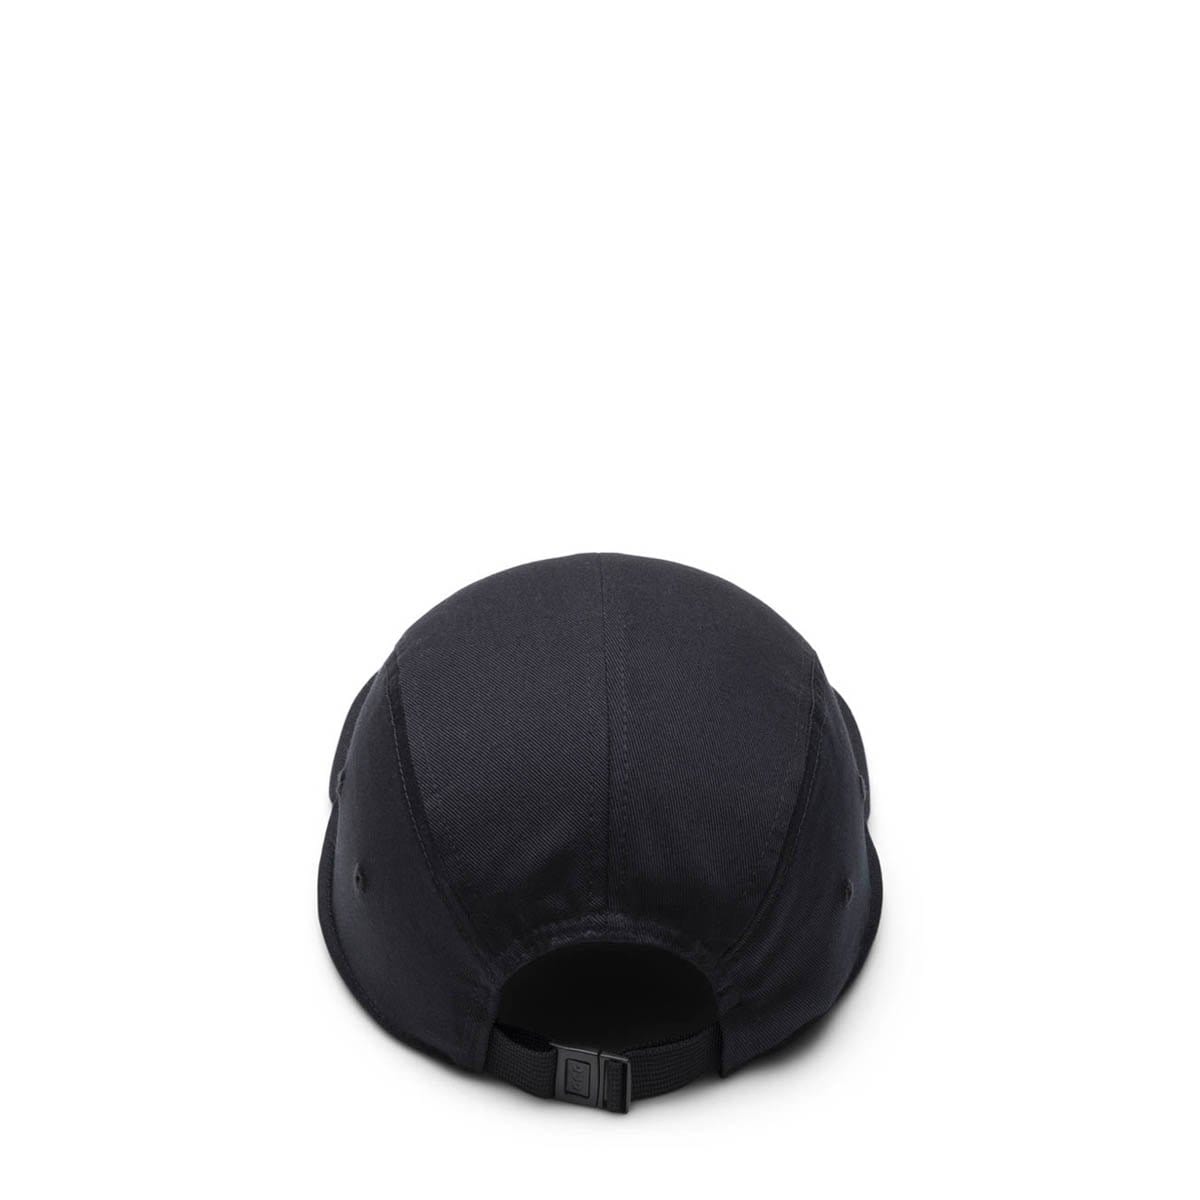 Nike Headwear BLACK [010] / OS ACG AW84 CAP